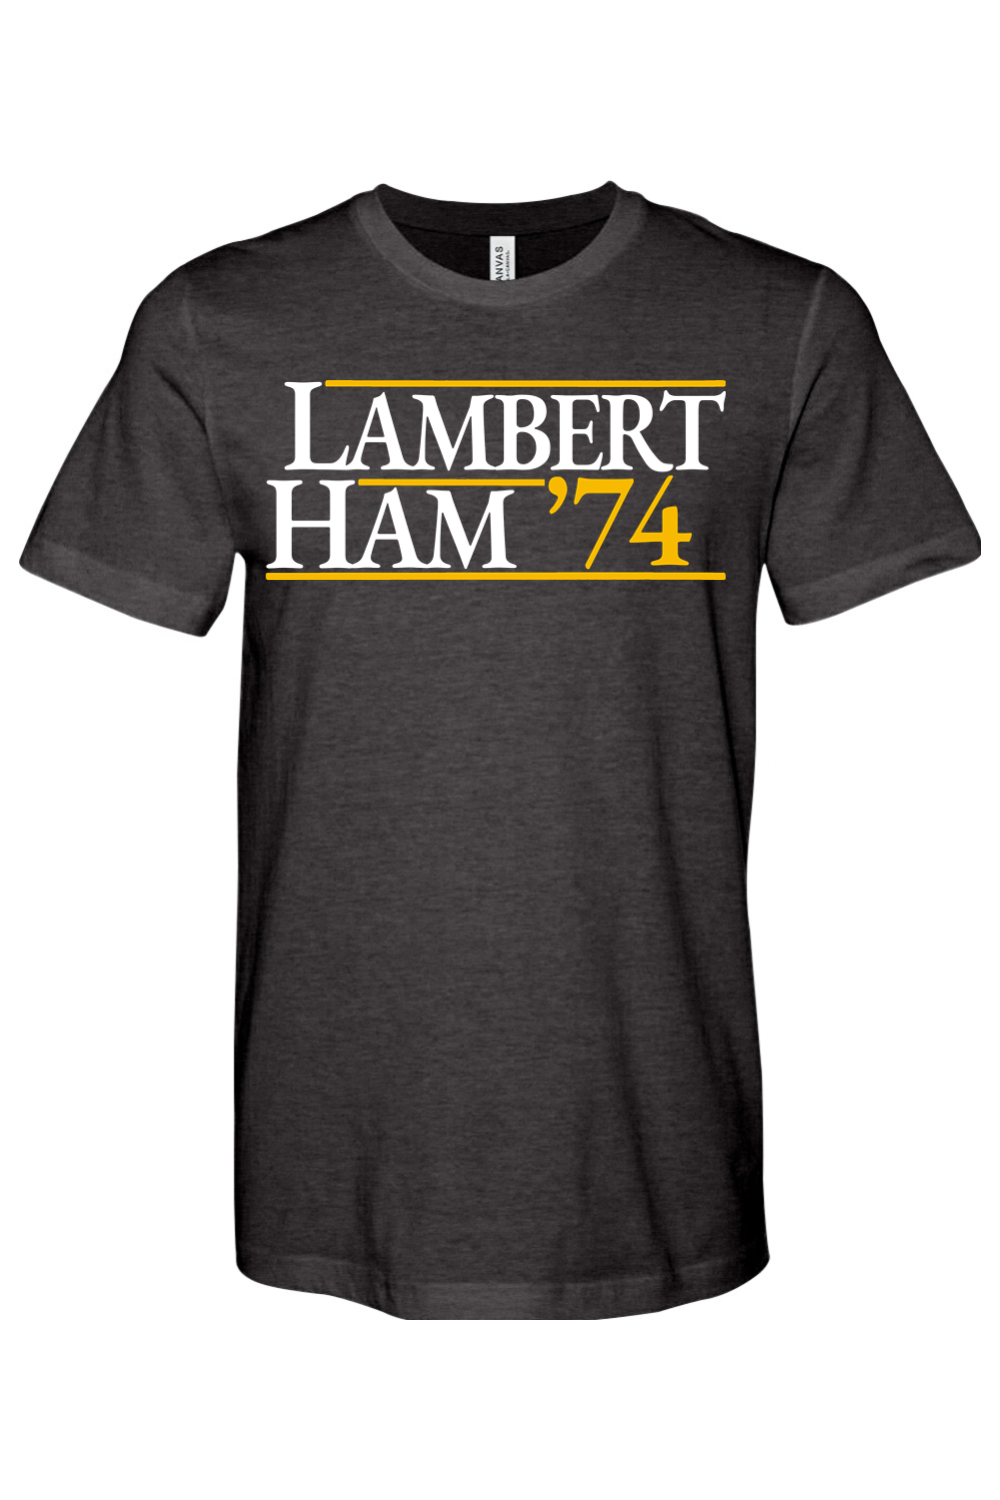 Lambert & Ham in '74 - Yinzylvania